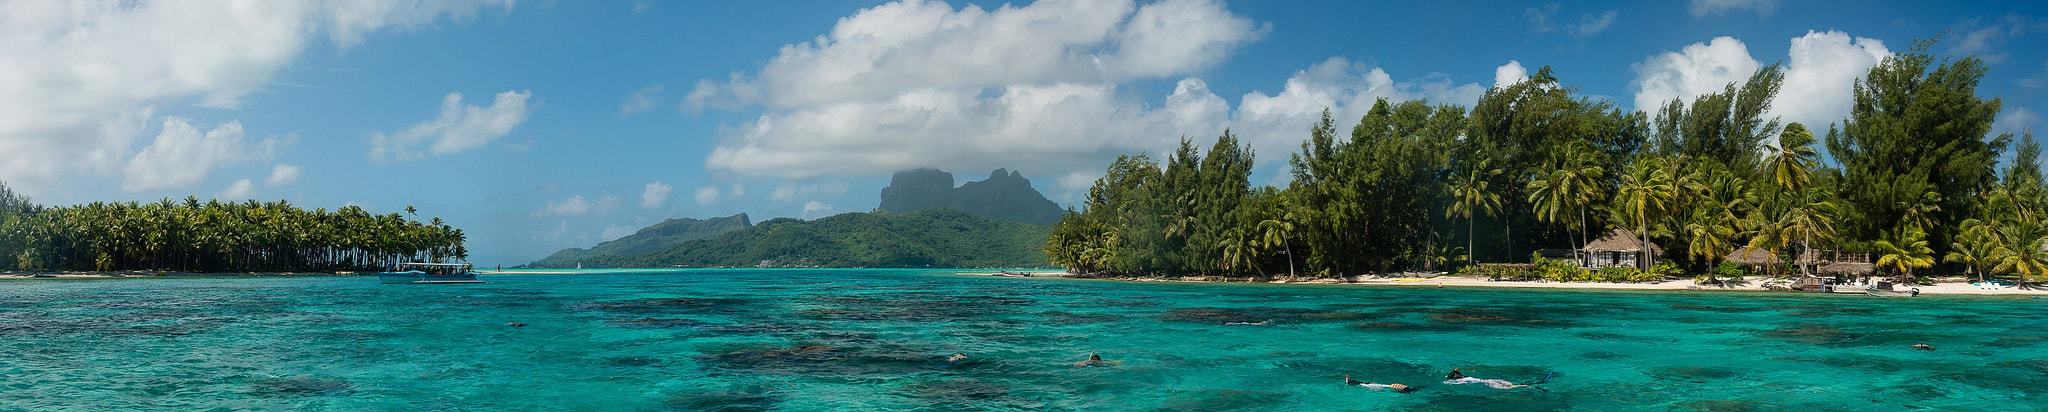 Gorgeous Panoramic Picture of Bora Bora taken by Herve 